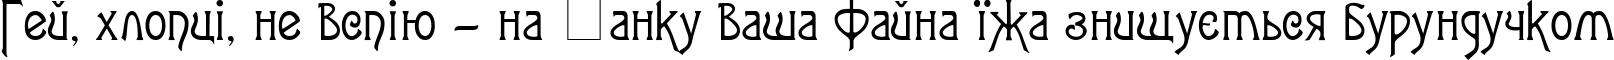 Пример написания шрифтом Agatha-Modern текста на украинском